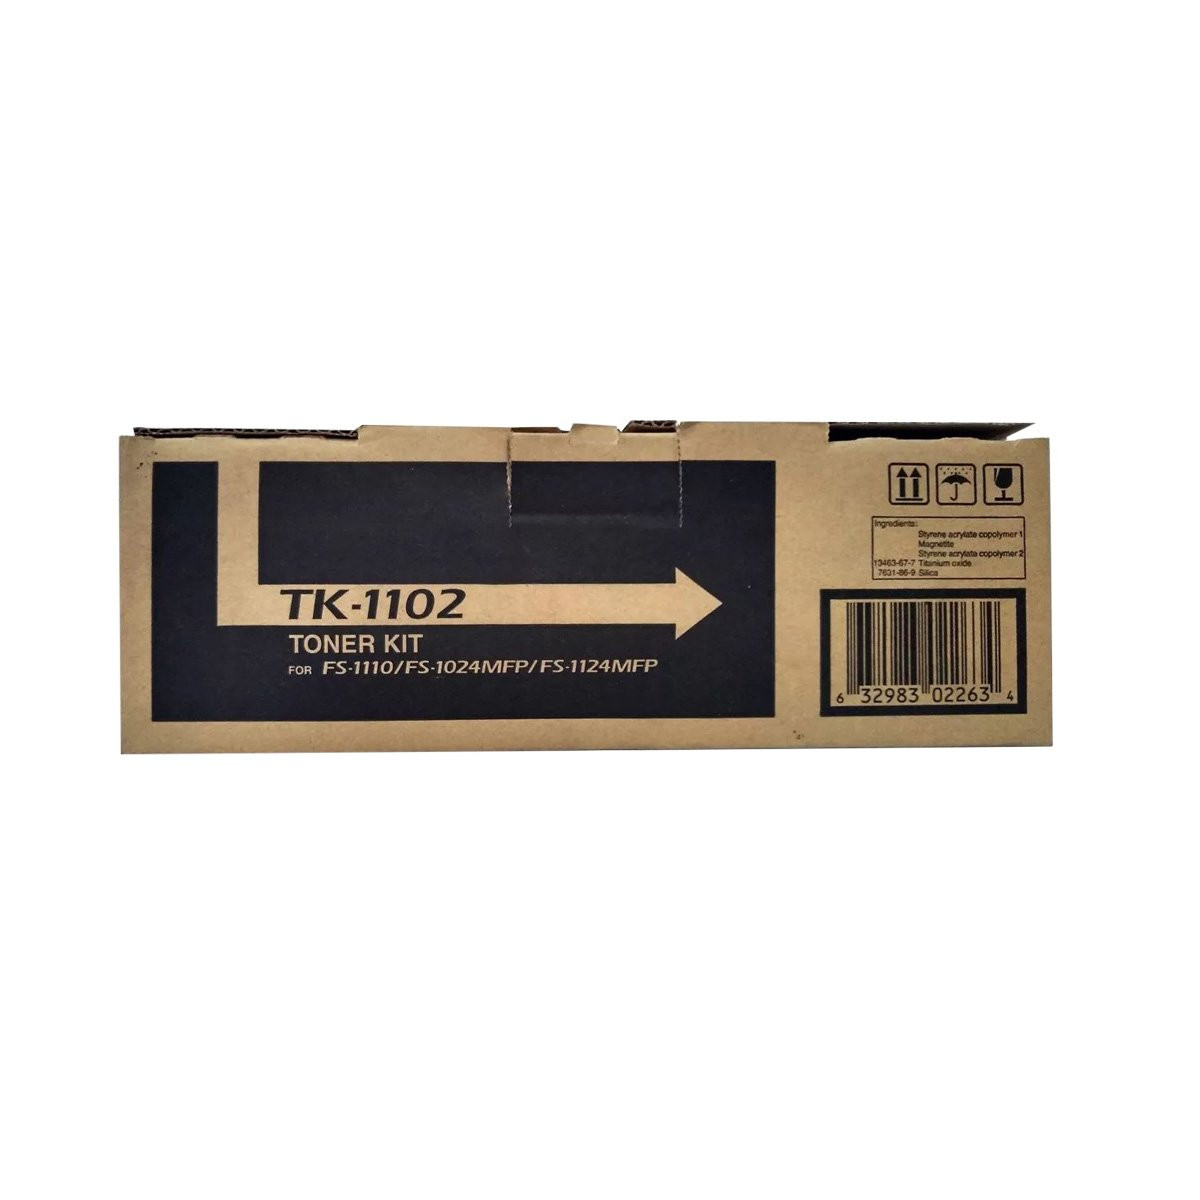 Toner Kyocera TK1102 TK-1102 | FS1110 FS1124 FS1024 FS1124MFP | Original 2.1k